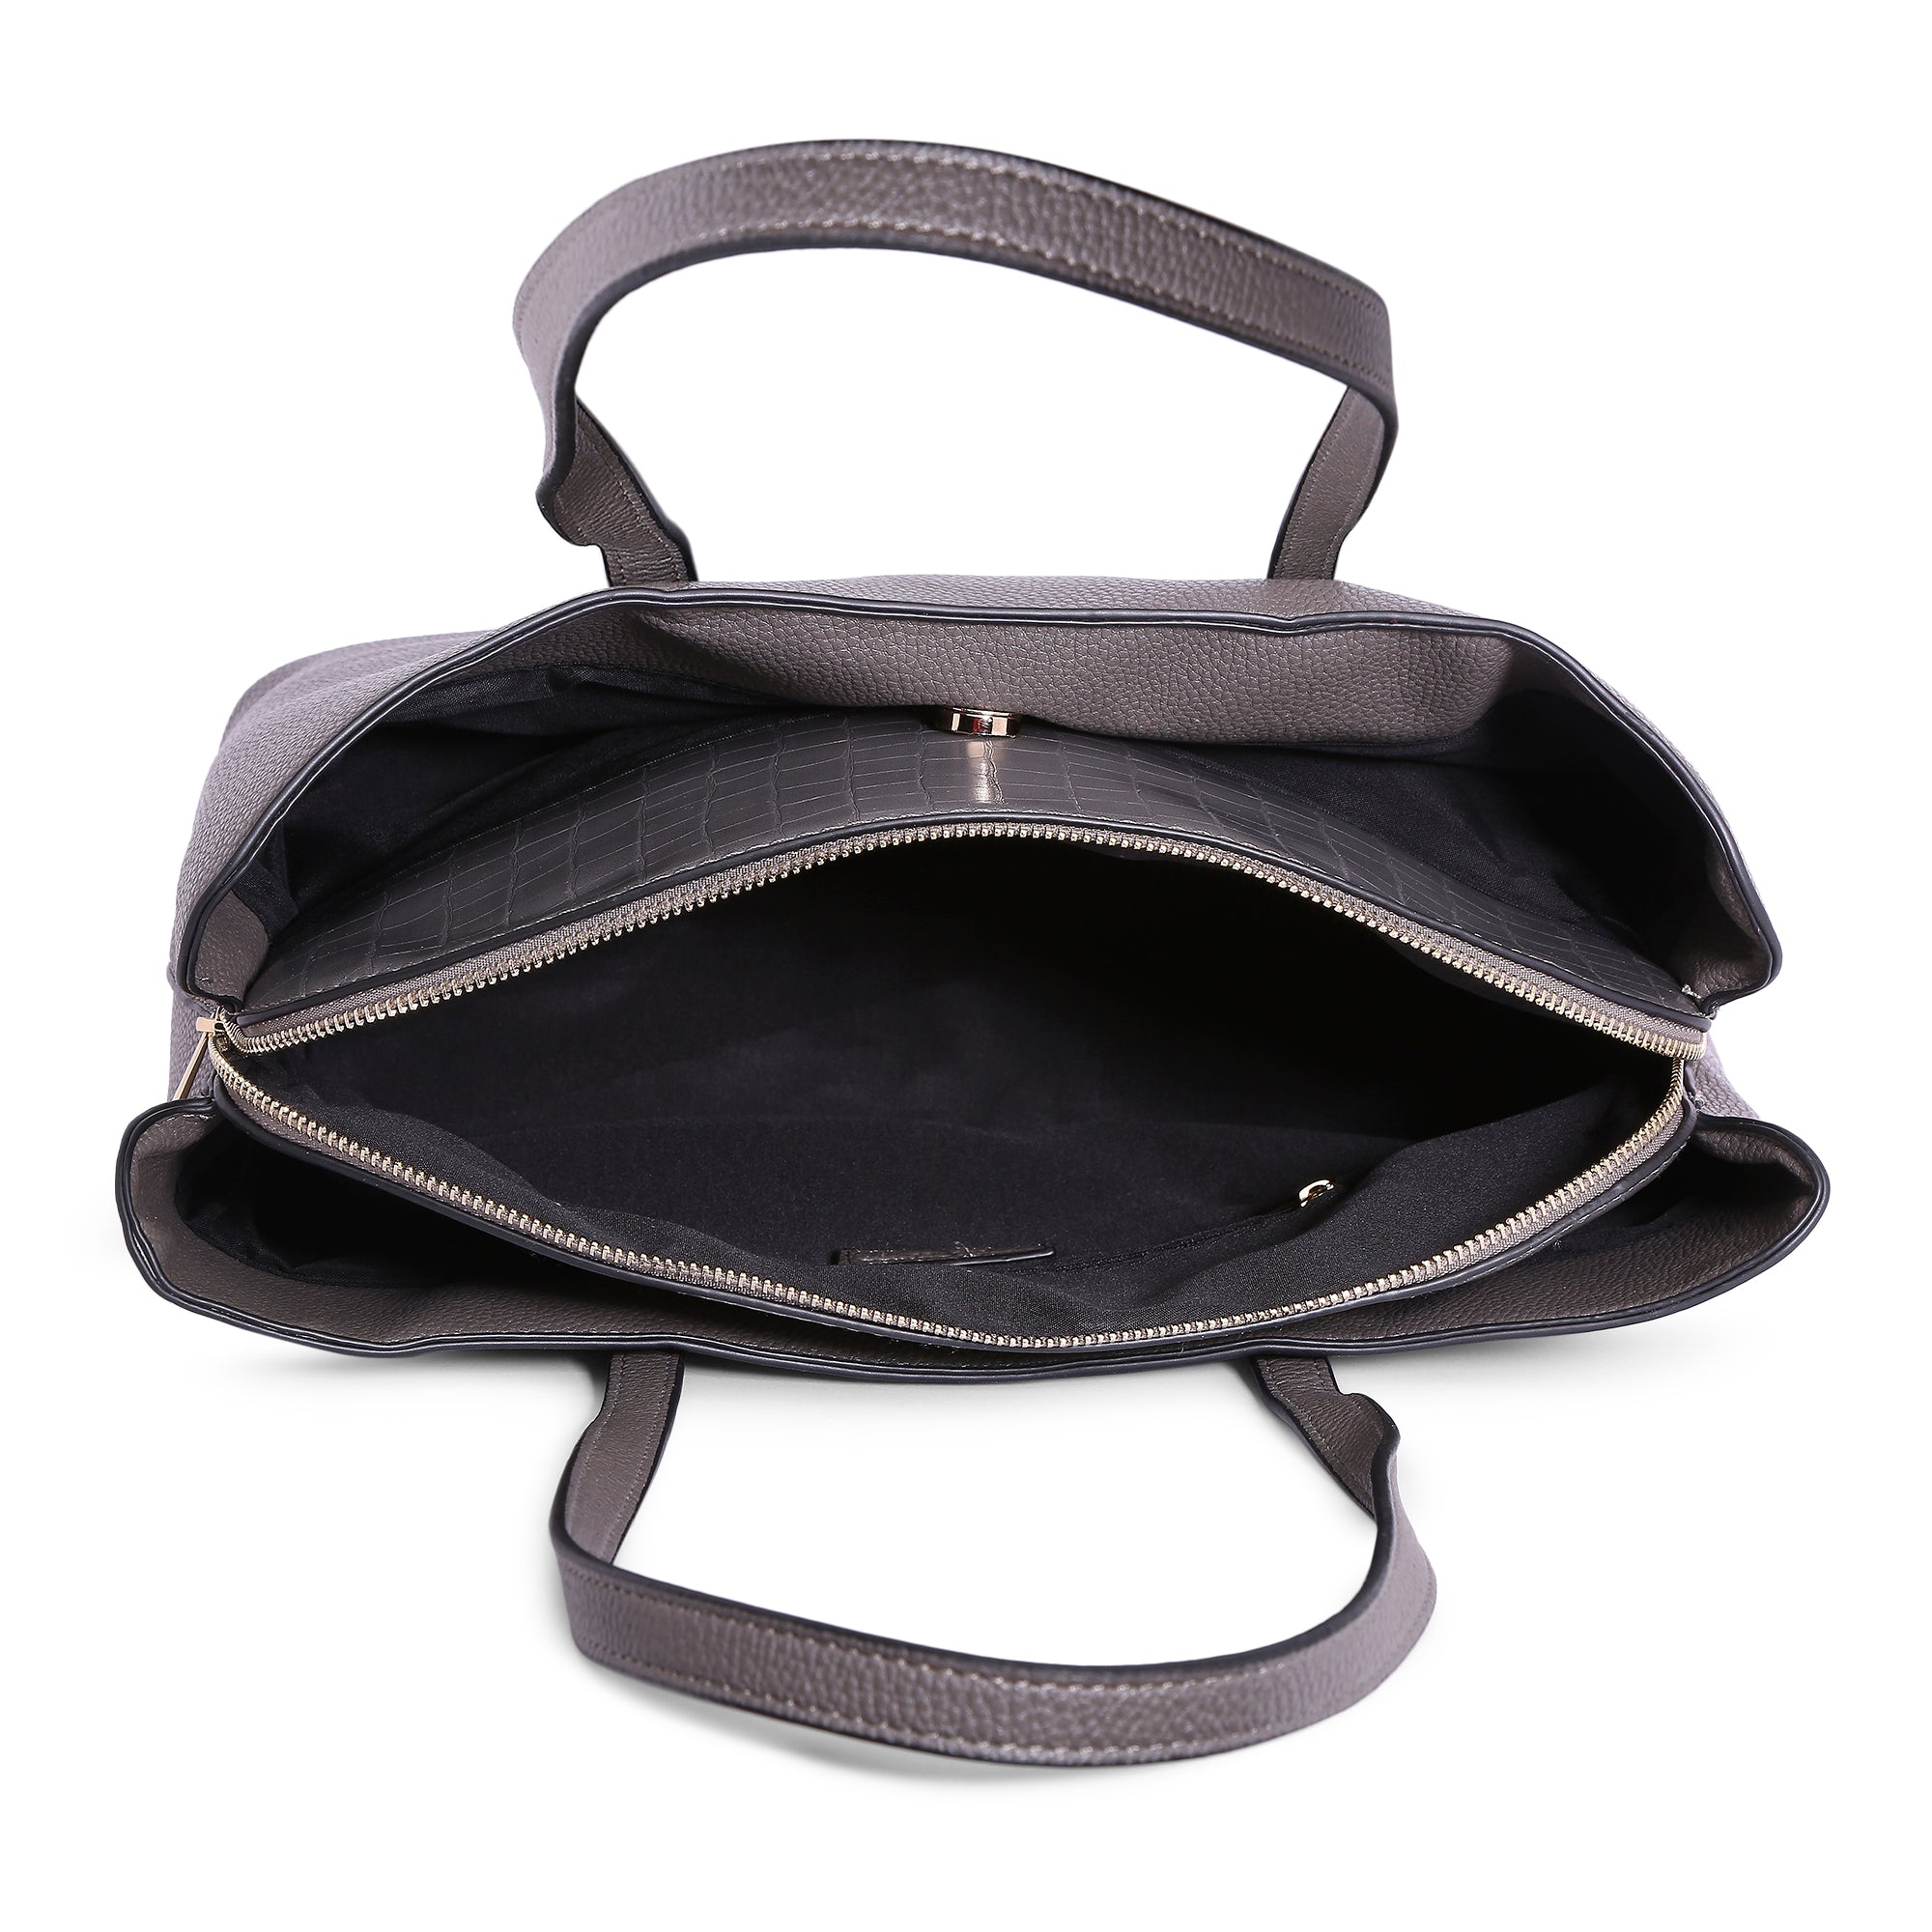 Accessorize London Women's Faux Leather Khaki Kaia Laptop Handheld Bag